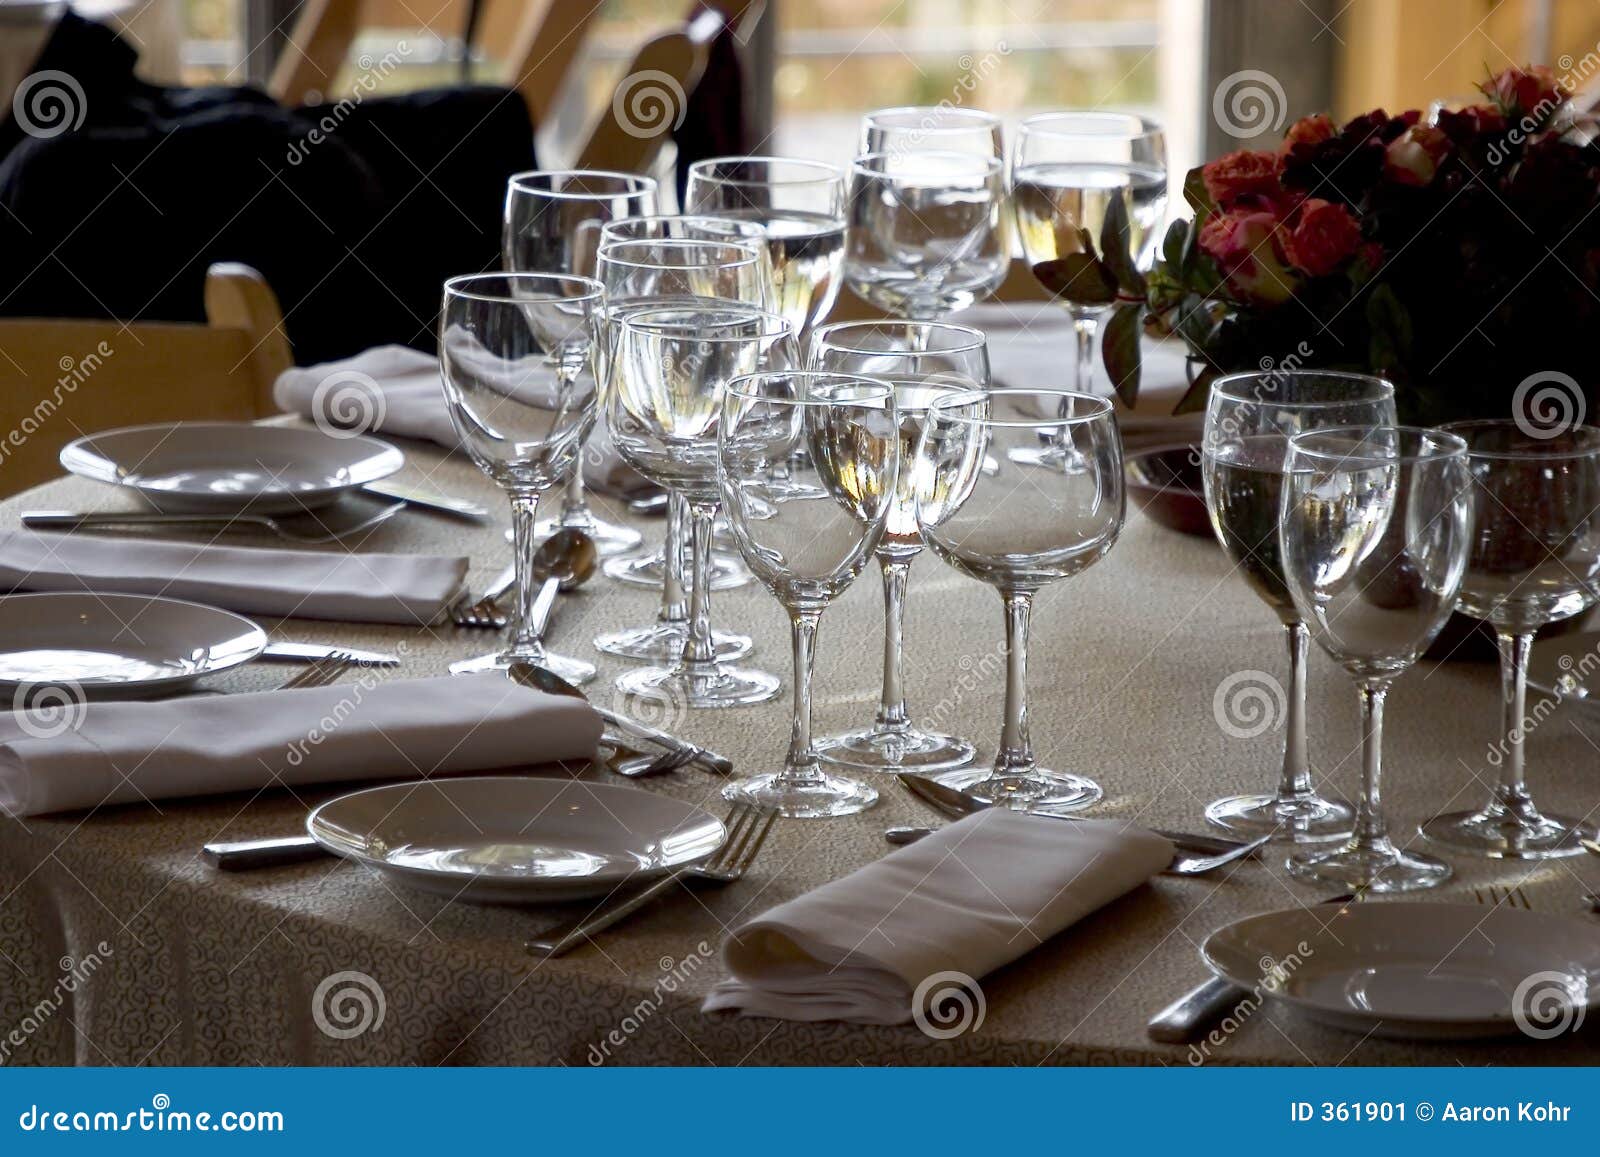 table setting #1